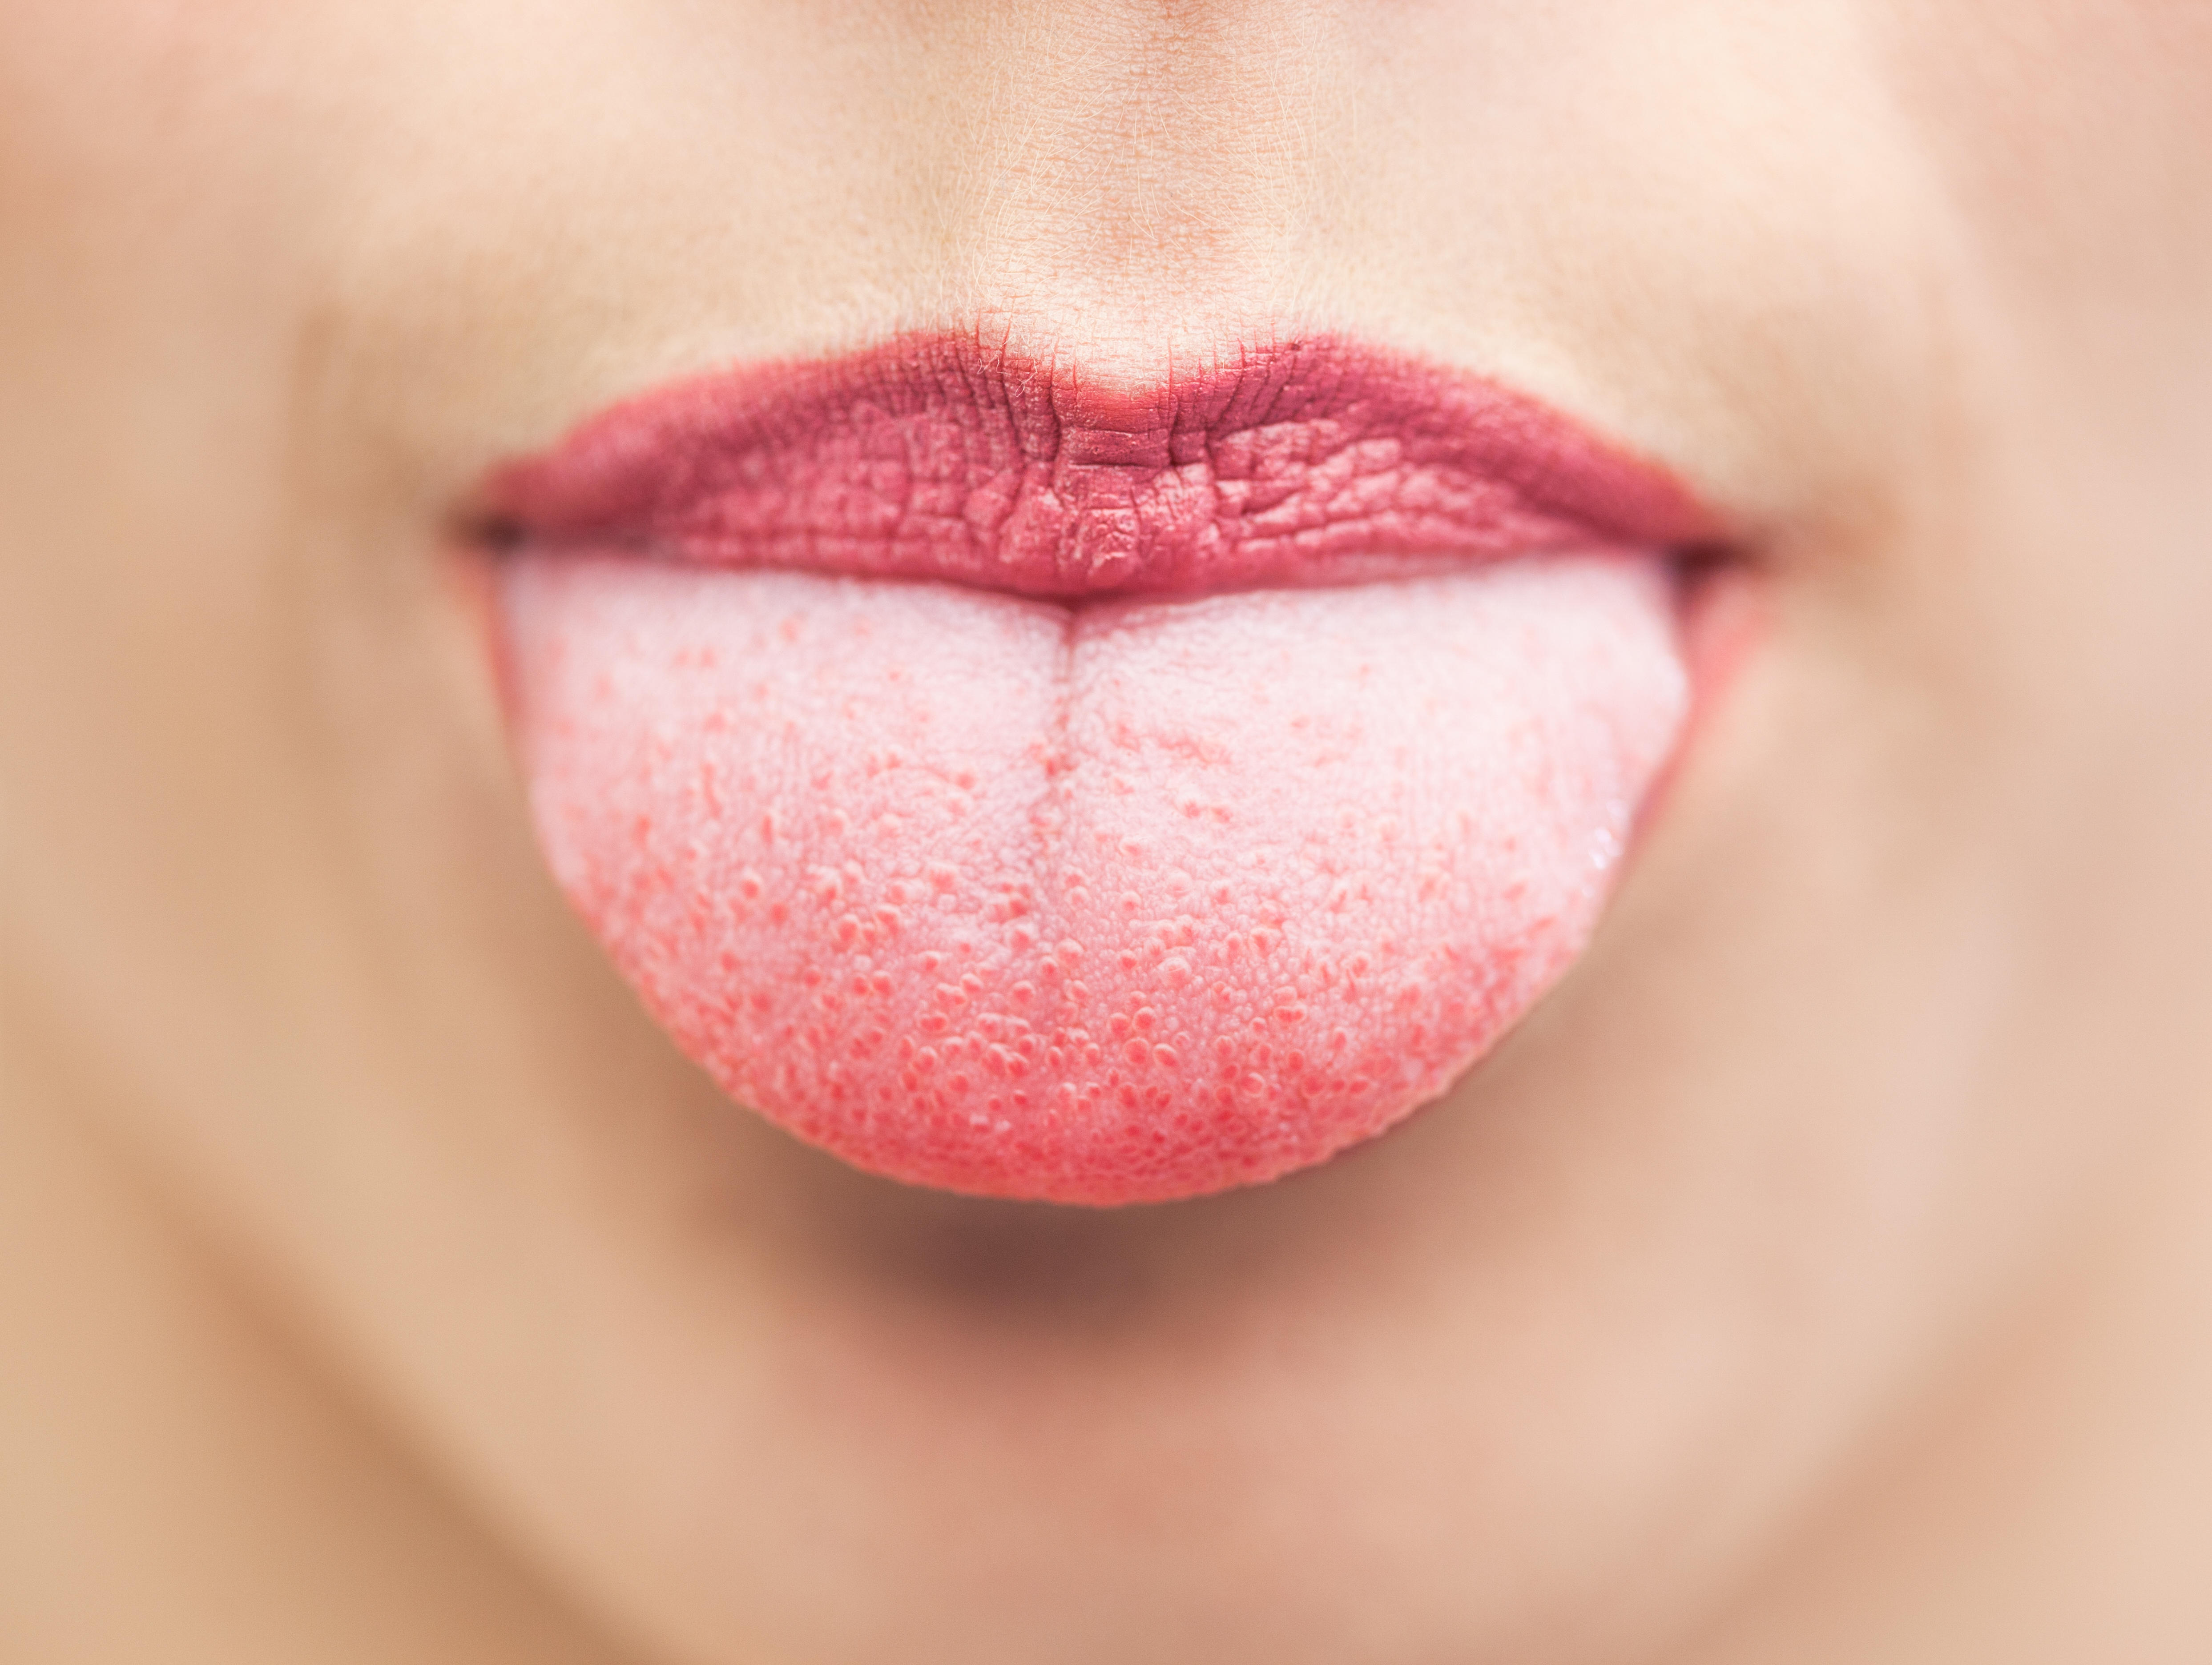 Tongue Chart Taste Buds